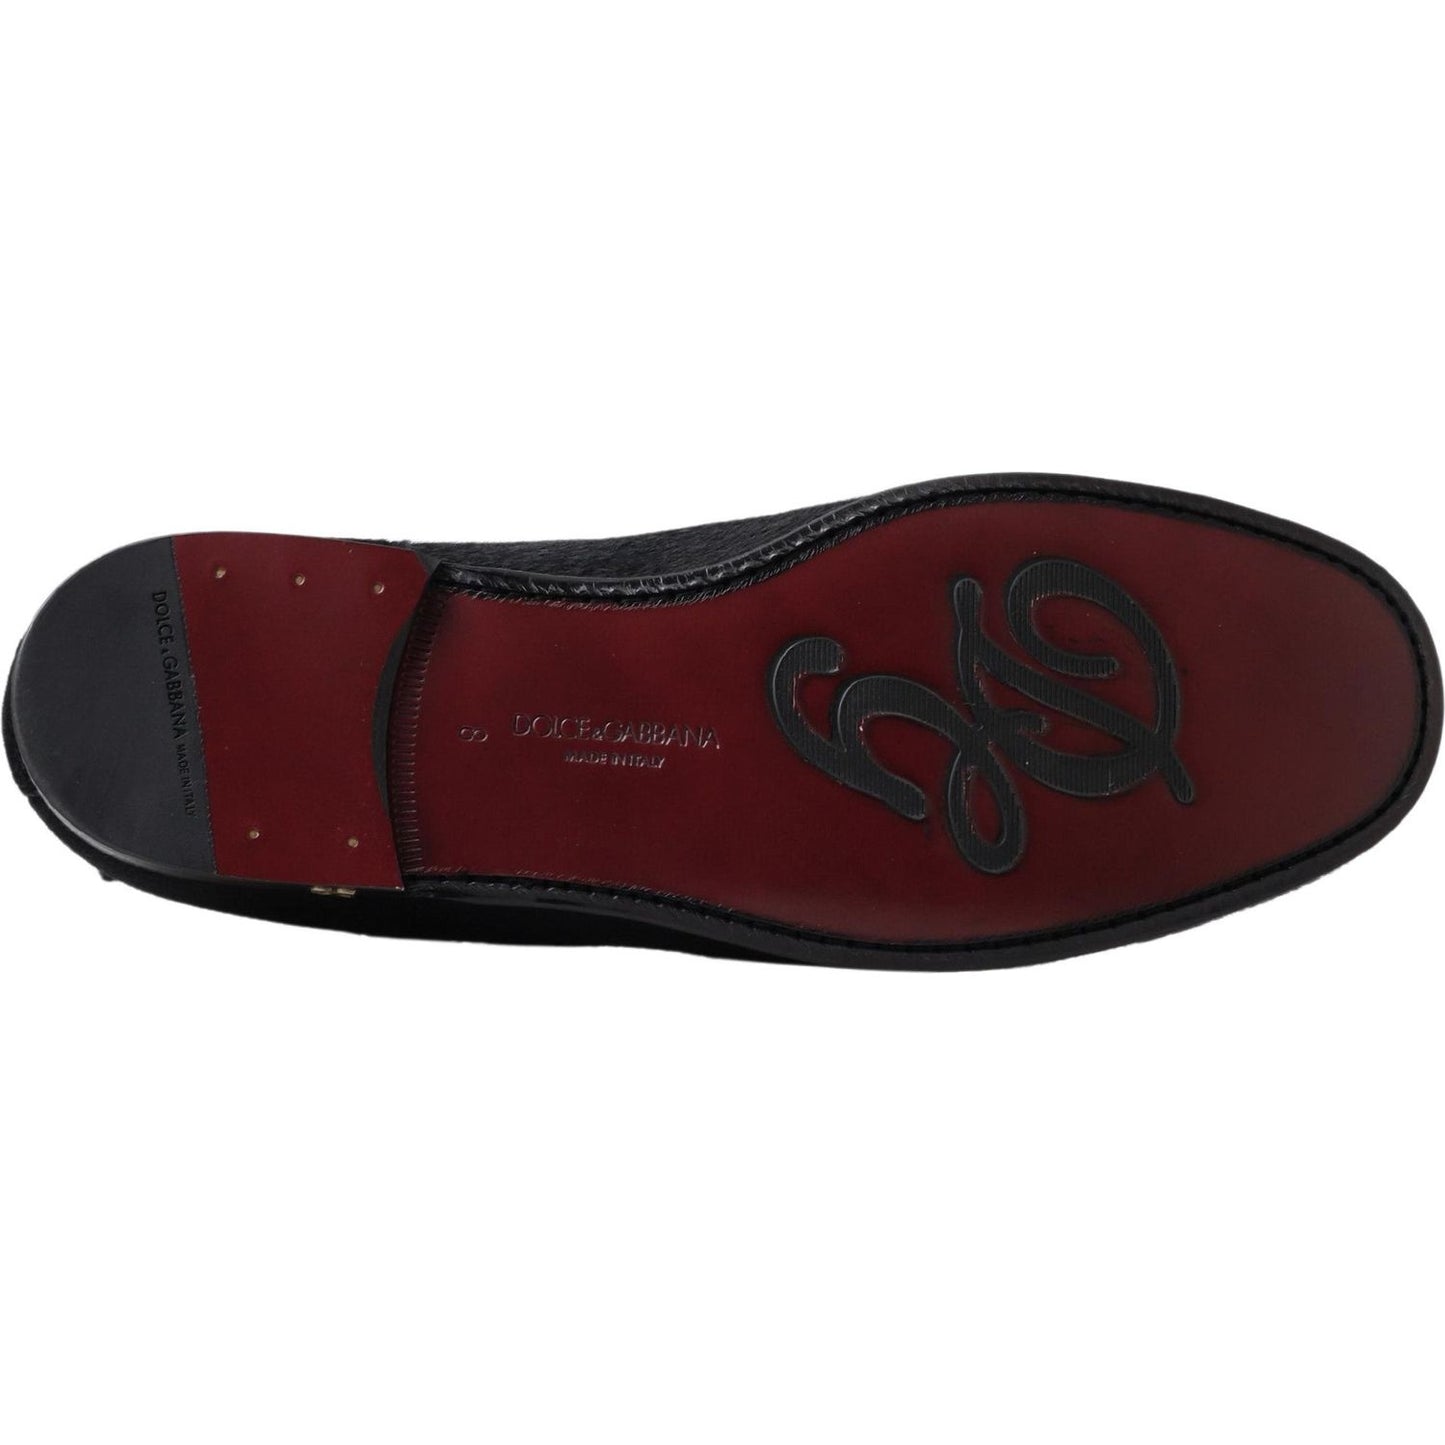 Dolce & Gabbana Elite Italian Leather Chelsea Boots black-leather-chelsea-men-ankle-boots-shoes